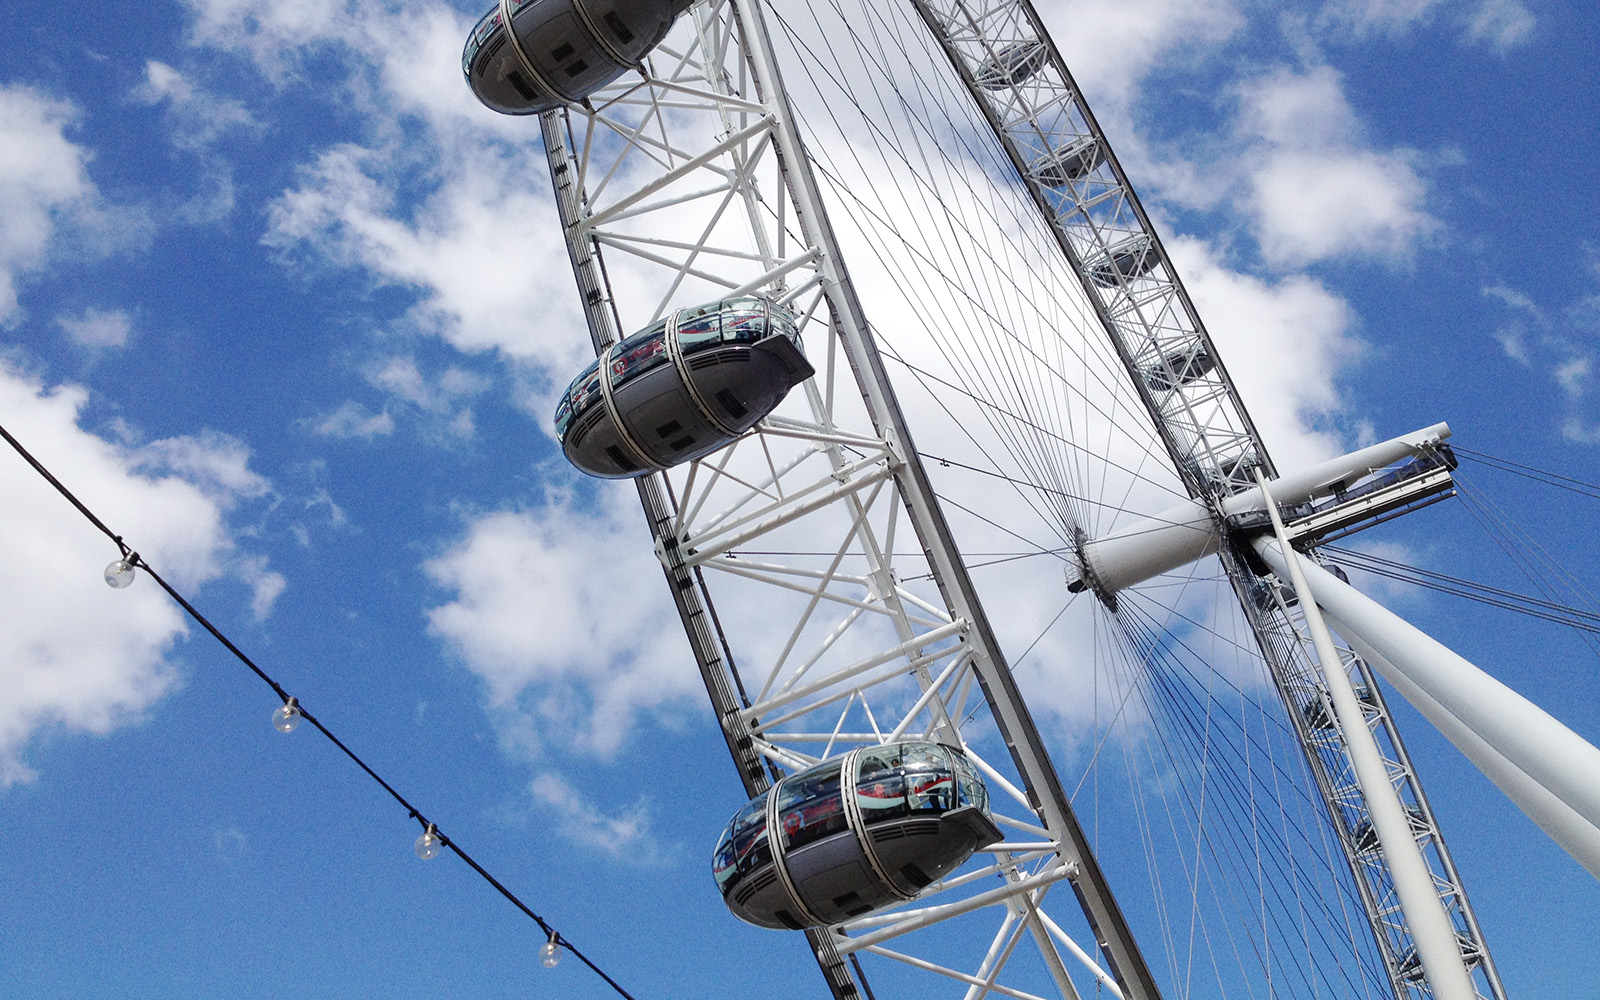 The London Eye photos